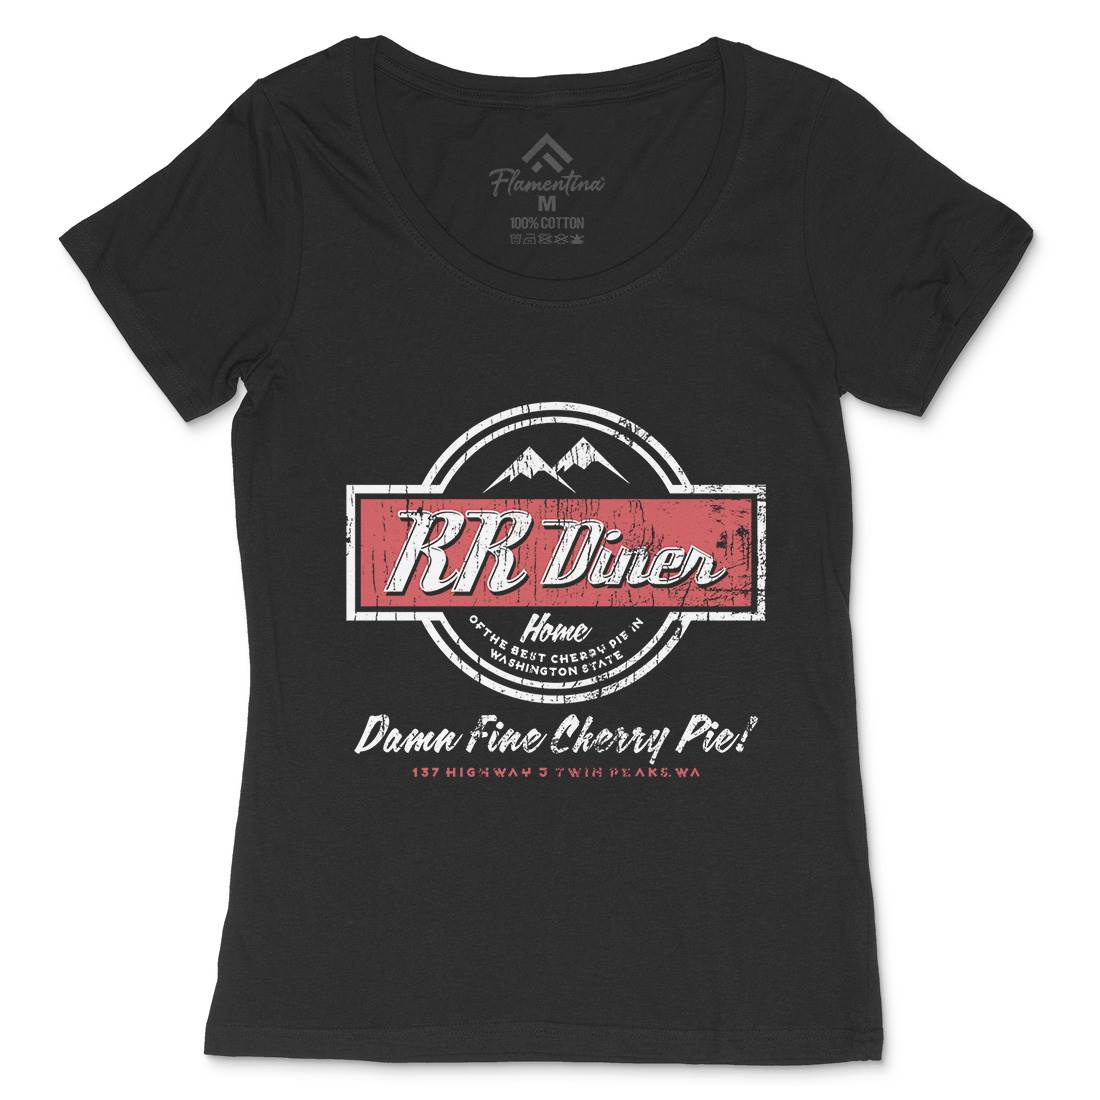 Double Rr Diner Womens Scoop Neck T-Shirt Horror D335